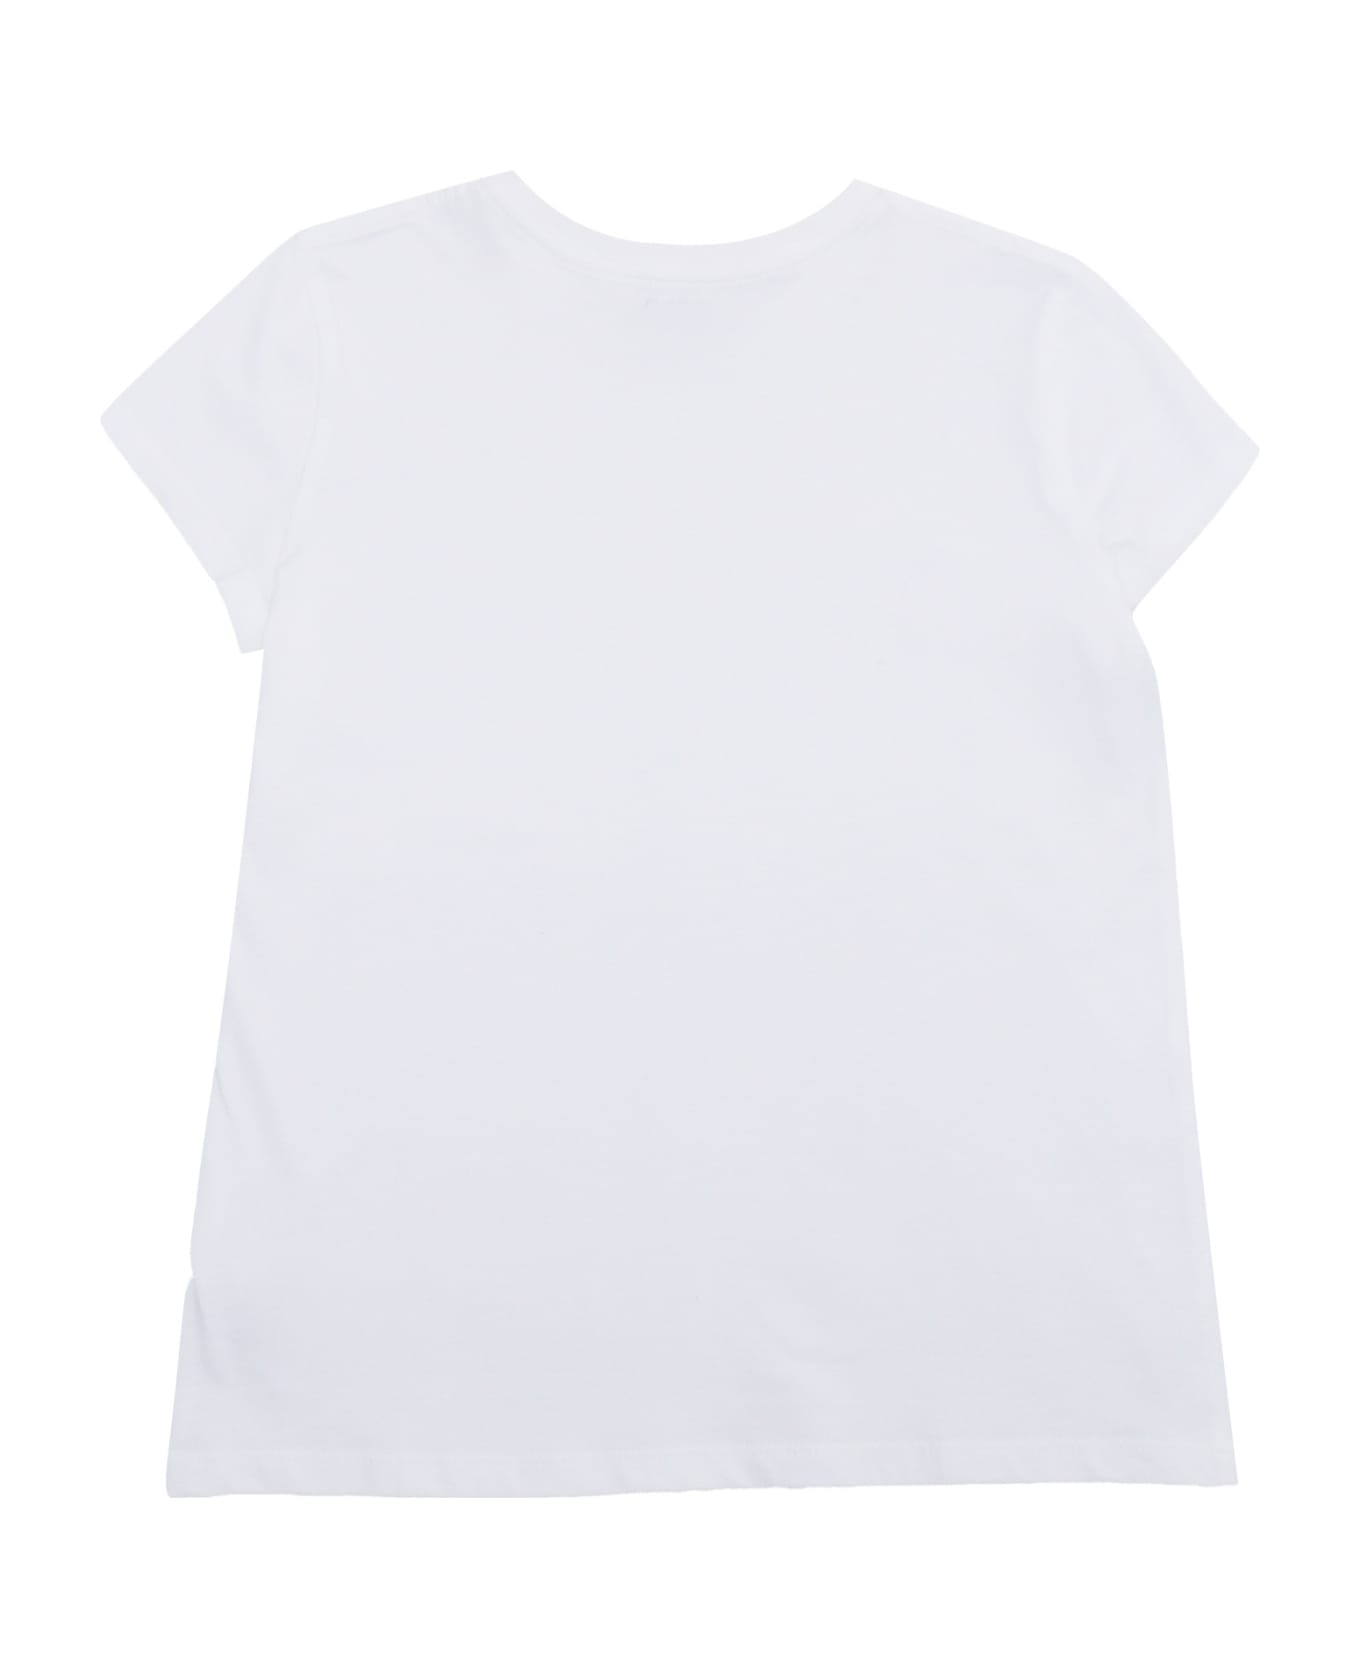 Polo Ralph Lauren White T-shirt With Logo - WHITE